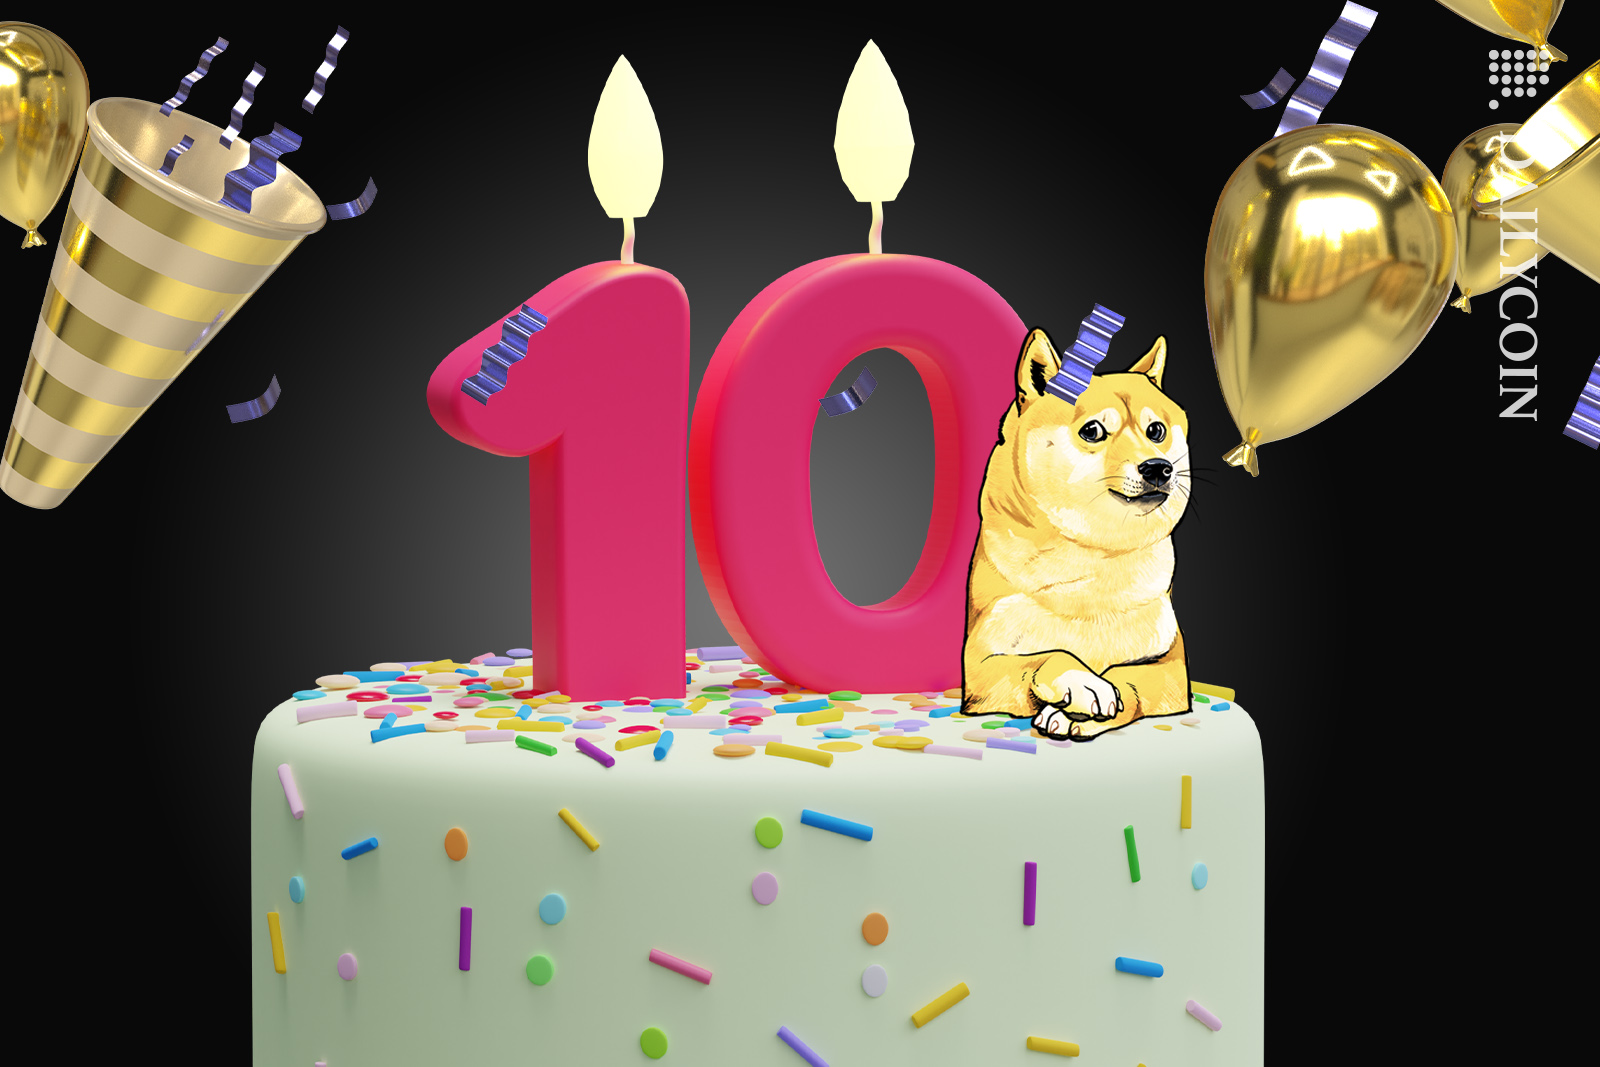 DOGE celebrating his 10th anniversary.